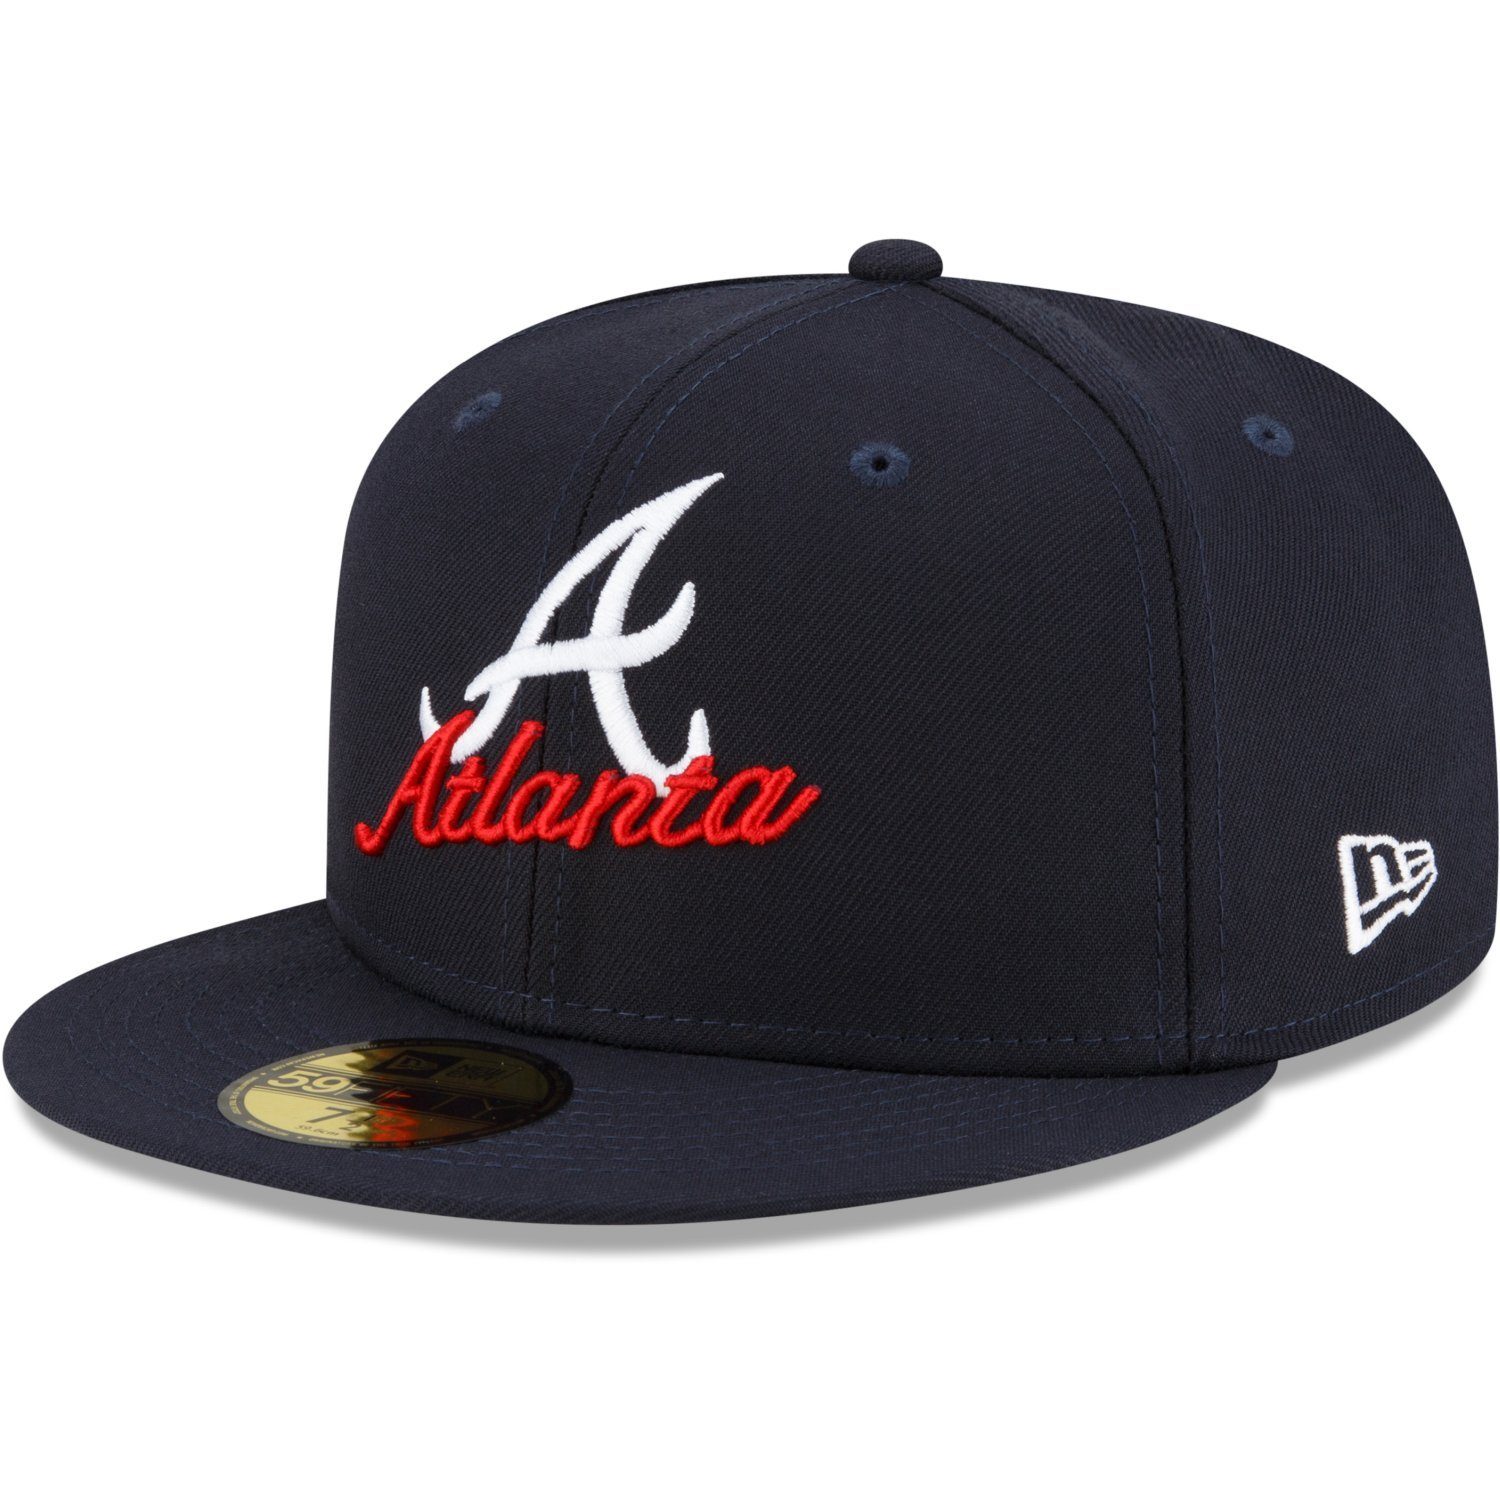 New Era Fitted Cap 59Fifty DUAL LOGO Atlanta Braves